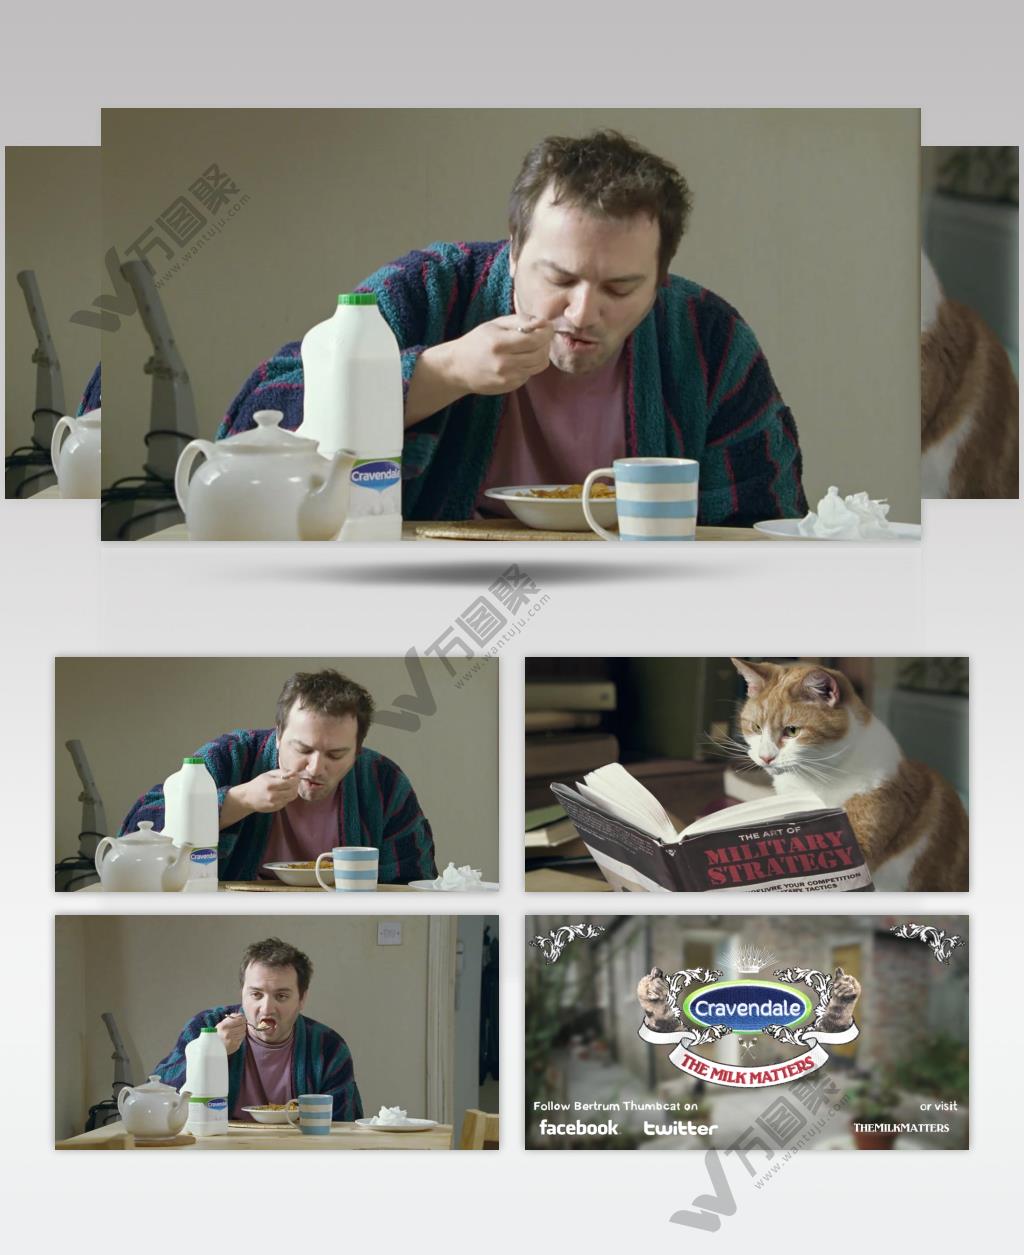 Cravendale 牛奶广告猫咪篇.1080p 欧美高清广告视频